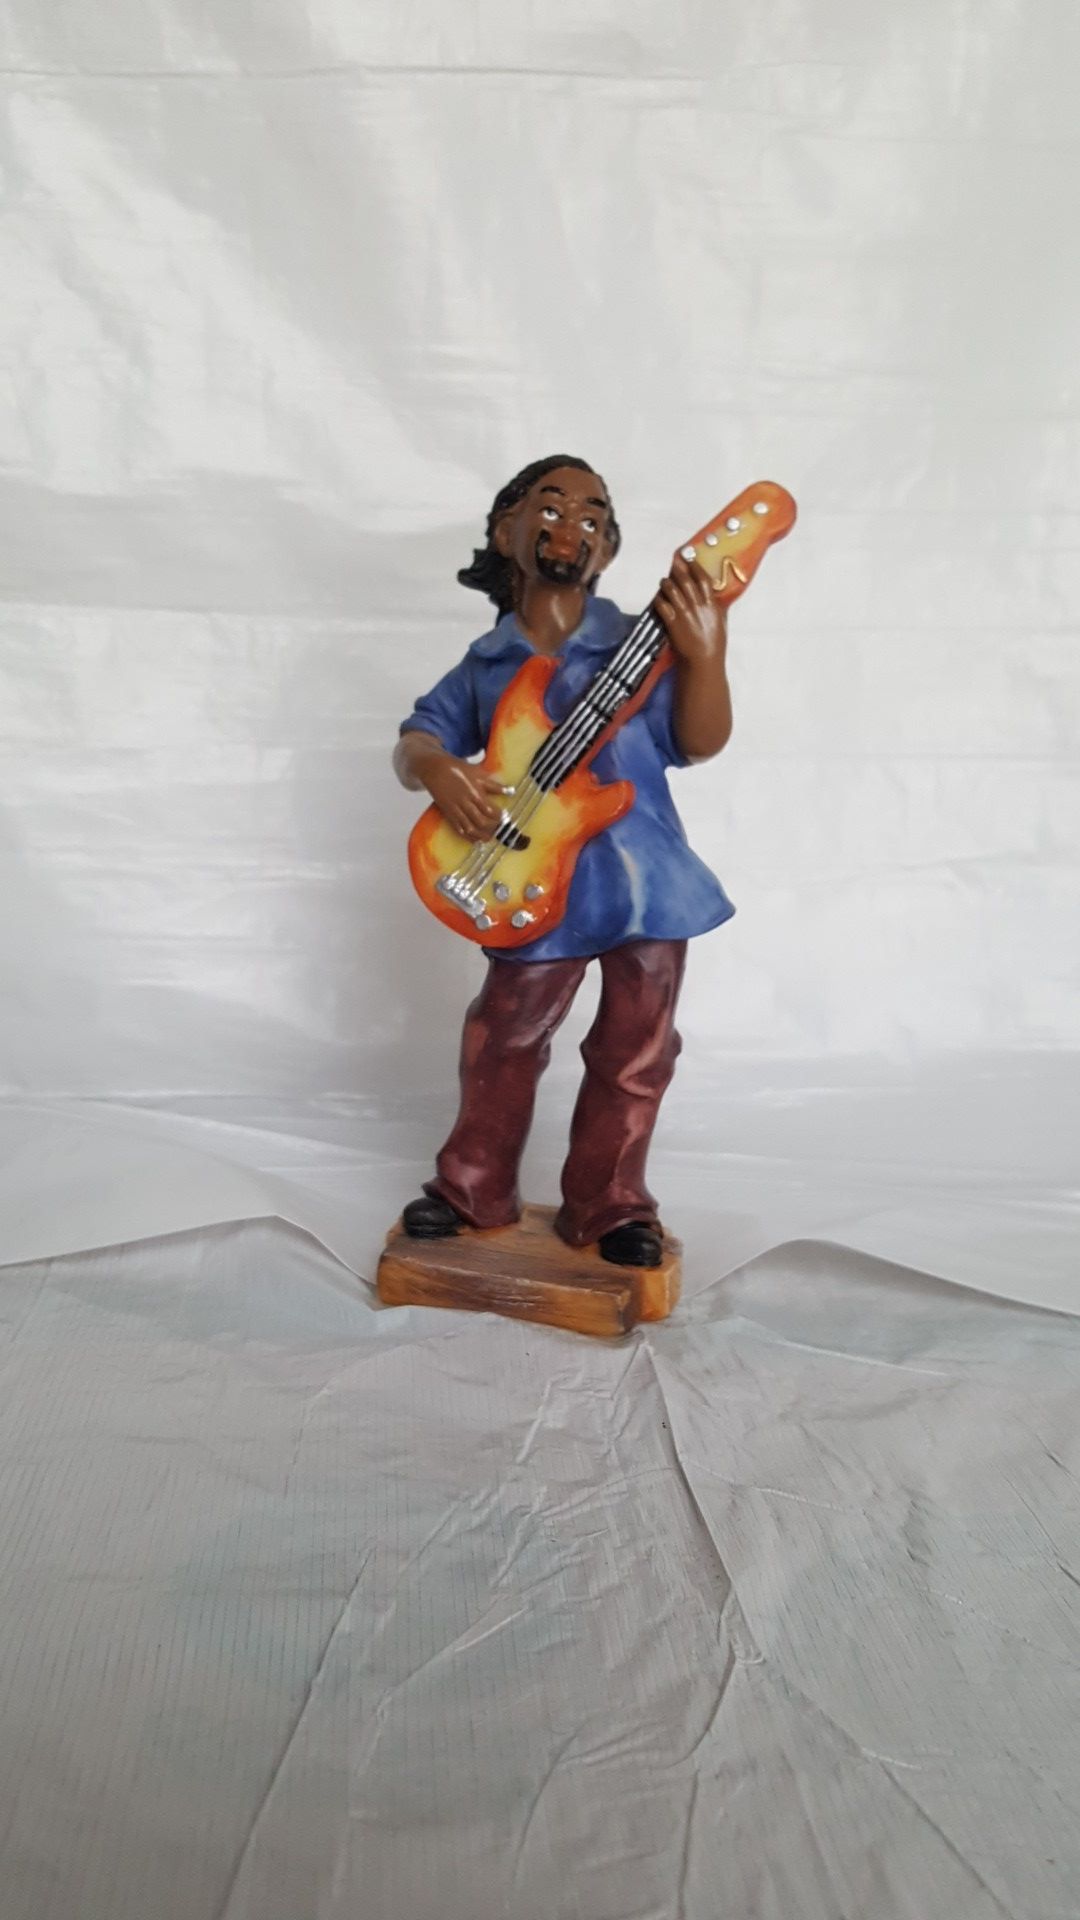 Guitar man figurines